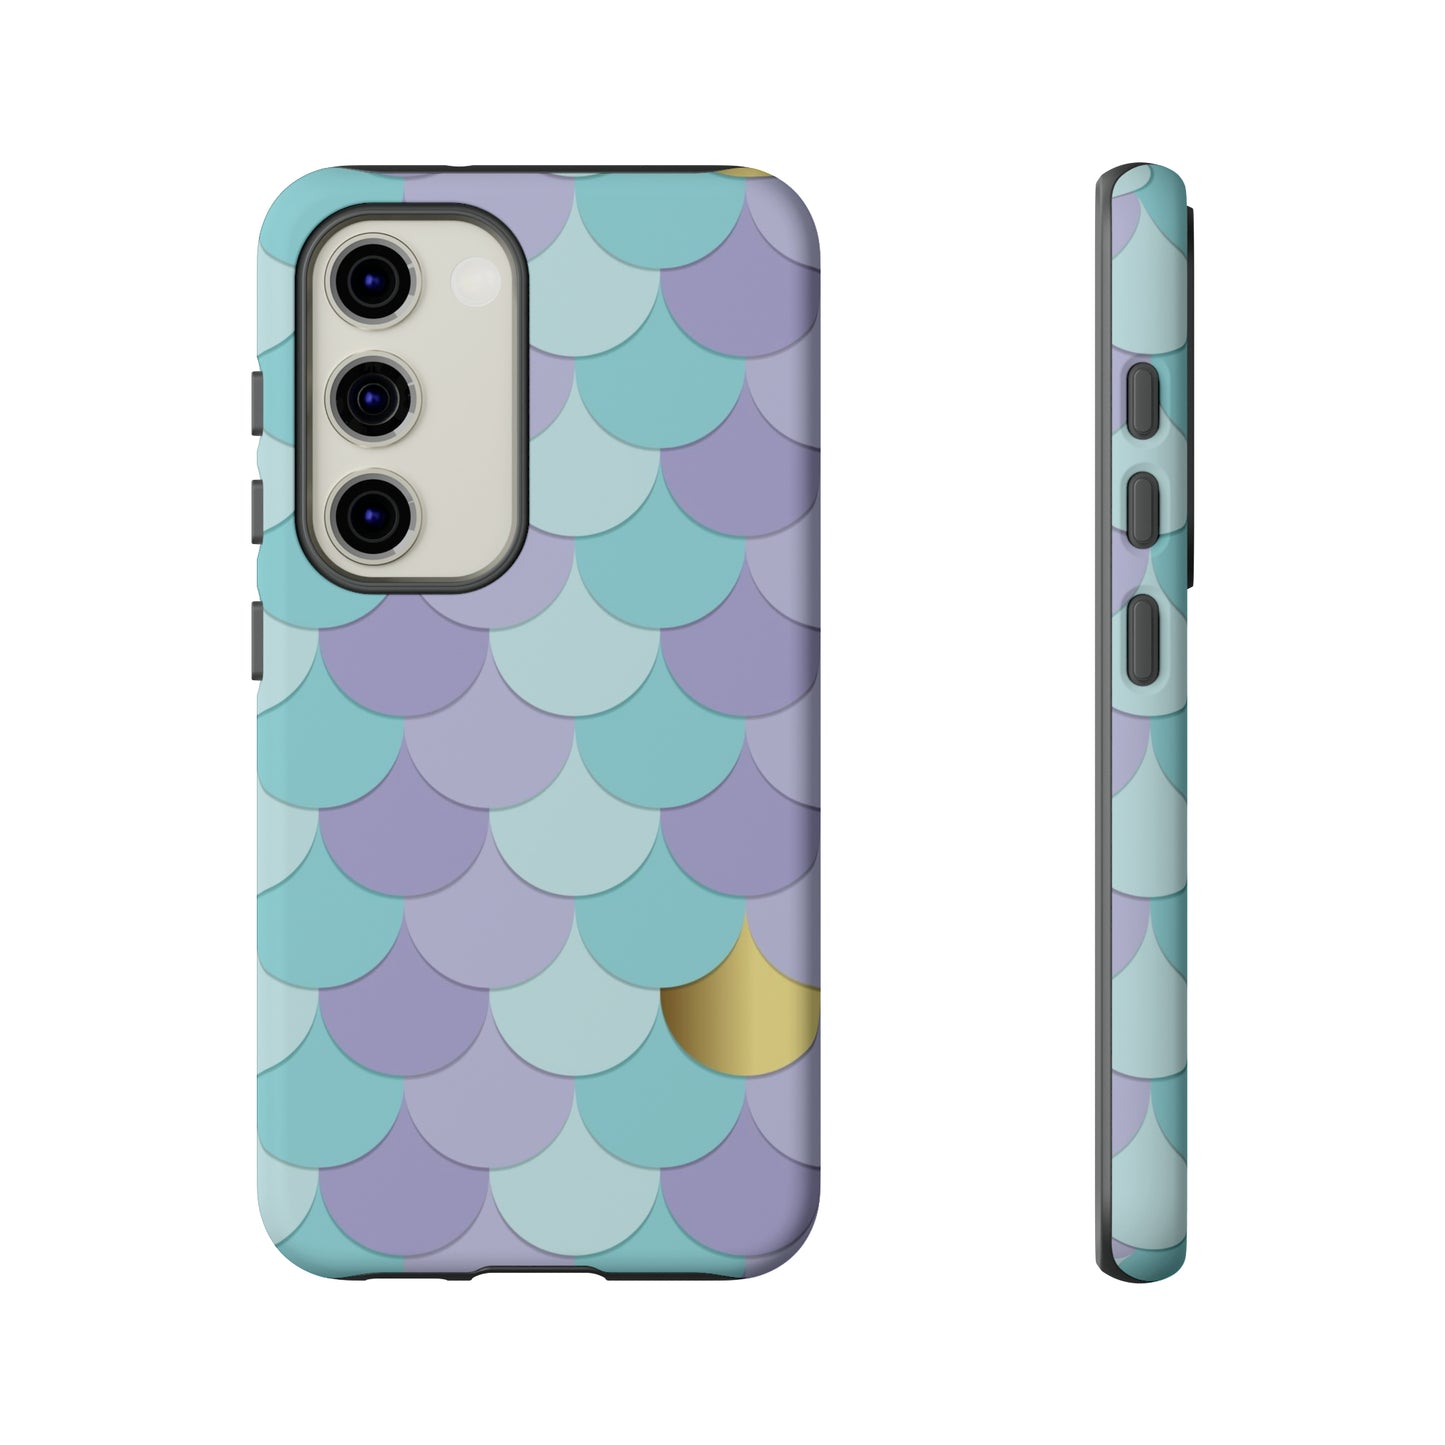 Something Fishy Only / Samsung Case